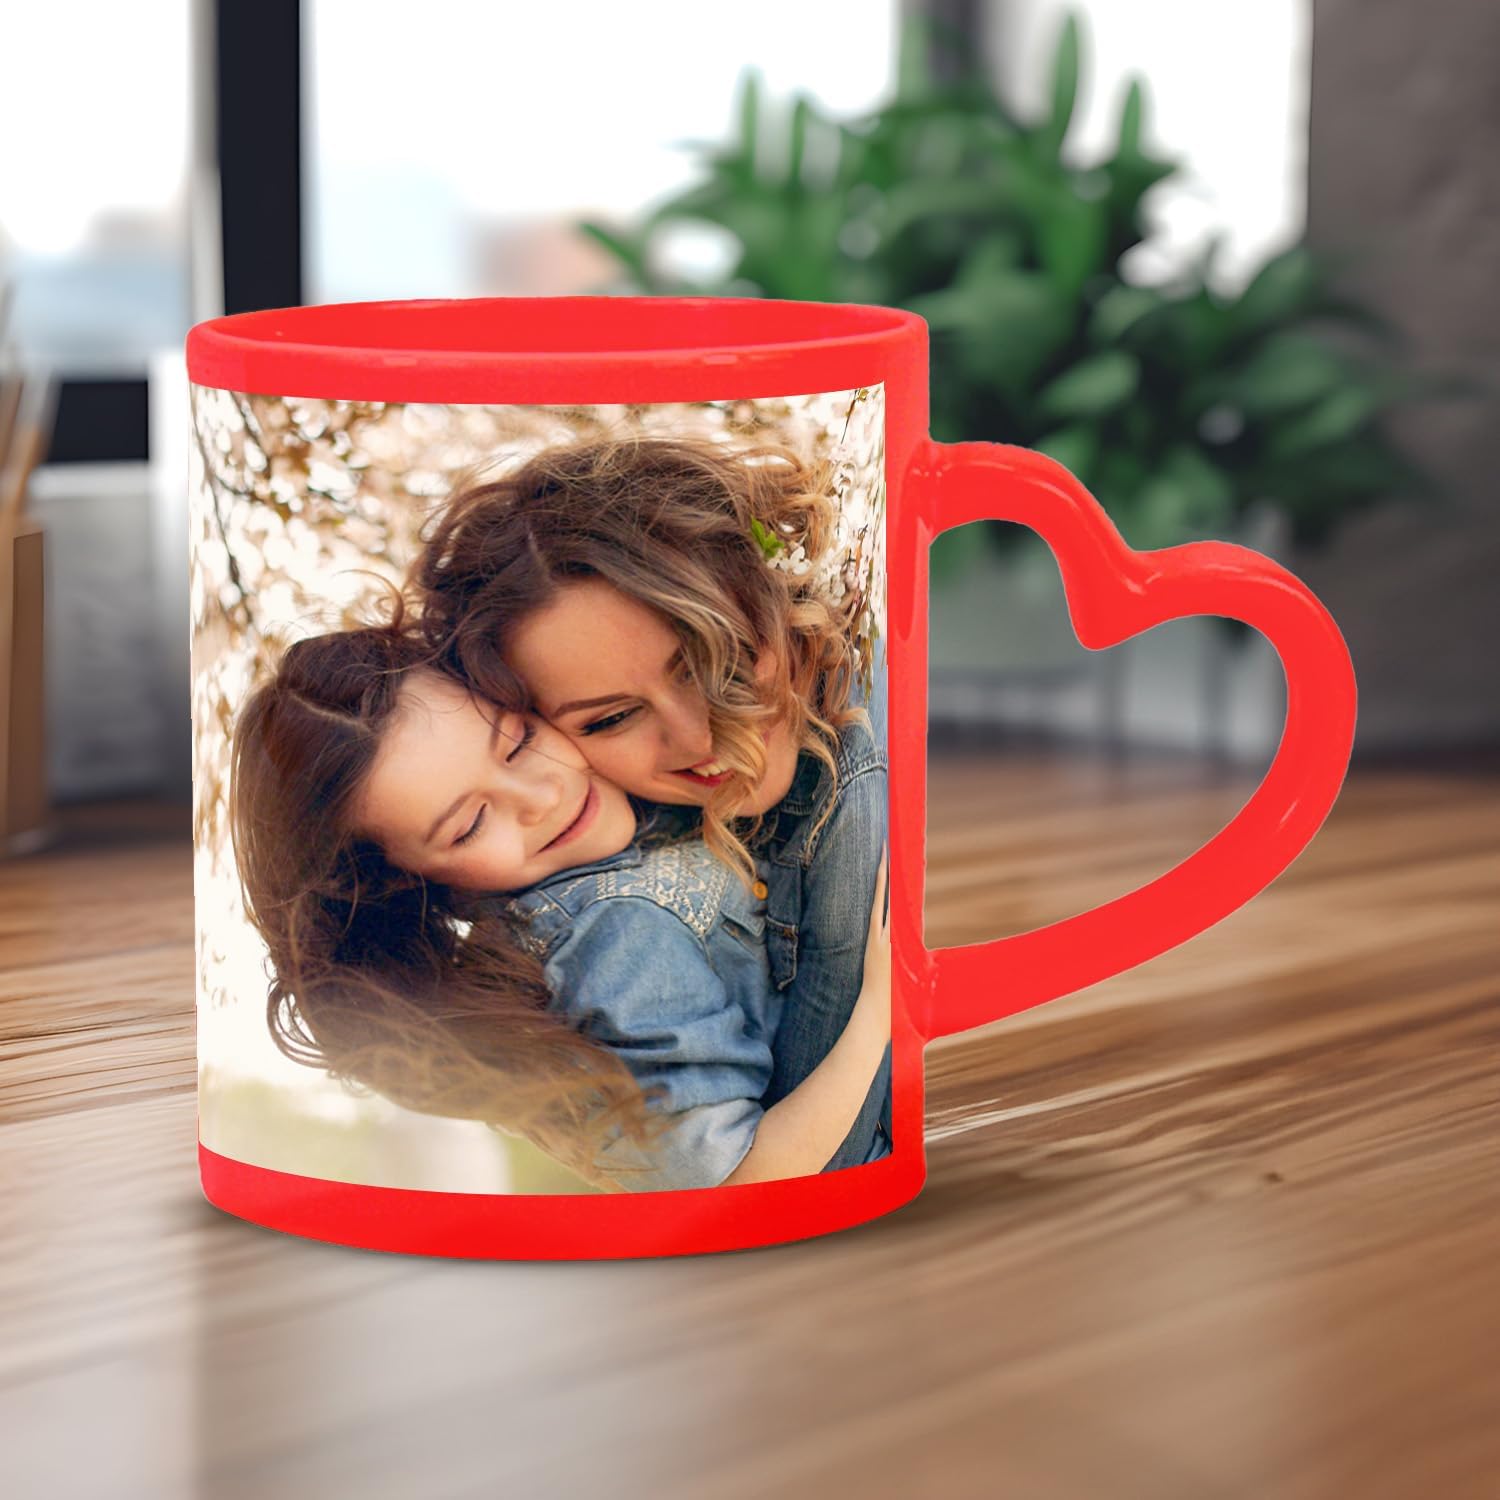 11oz-red-heat-sensitive-color-changing-photo-magic-mug-heart-handle-customize-photo-text